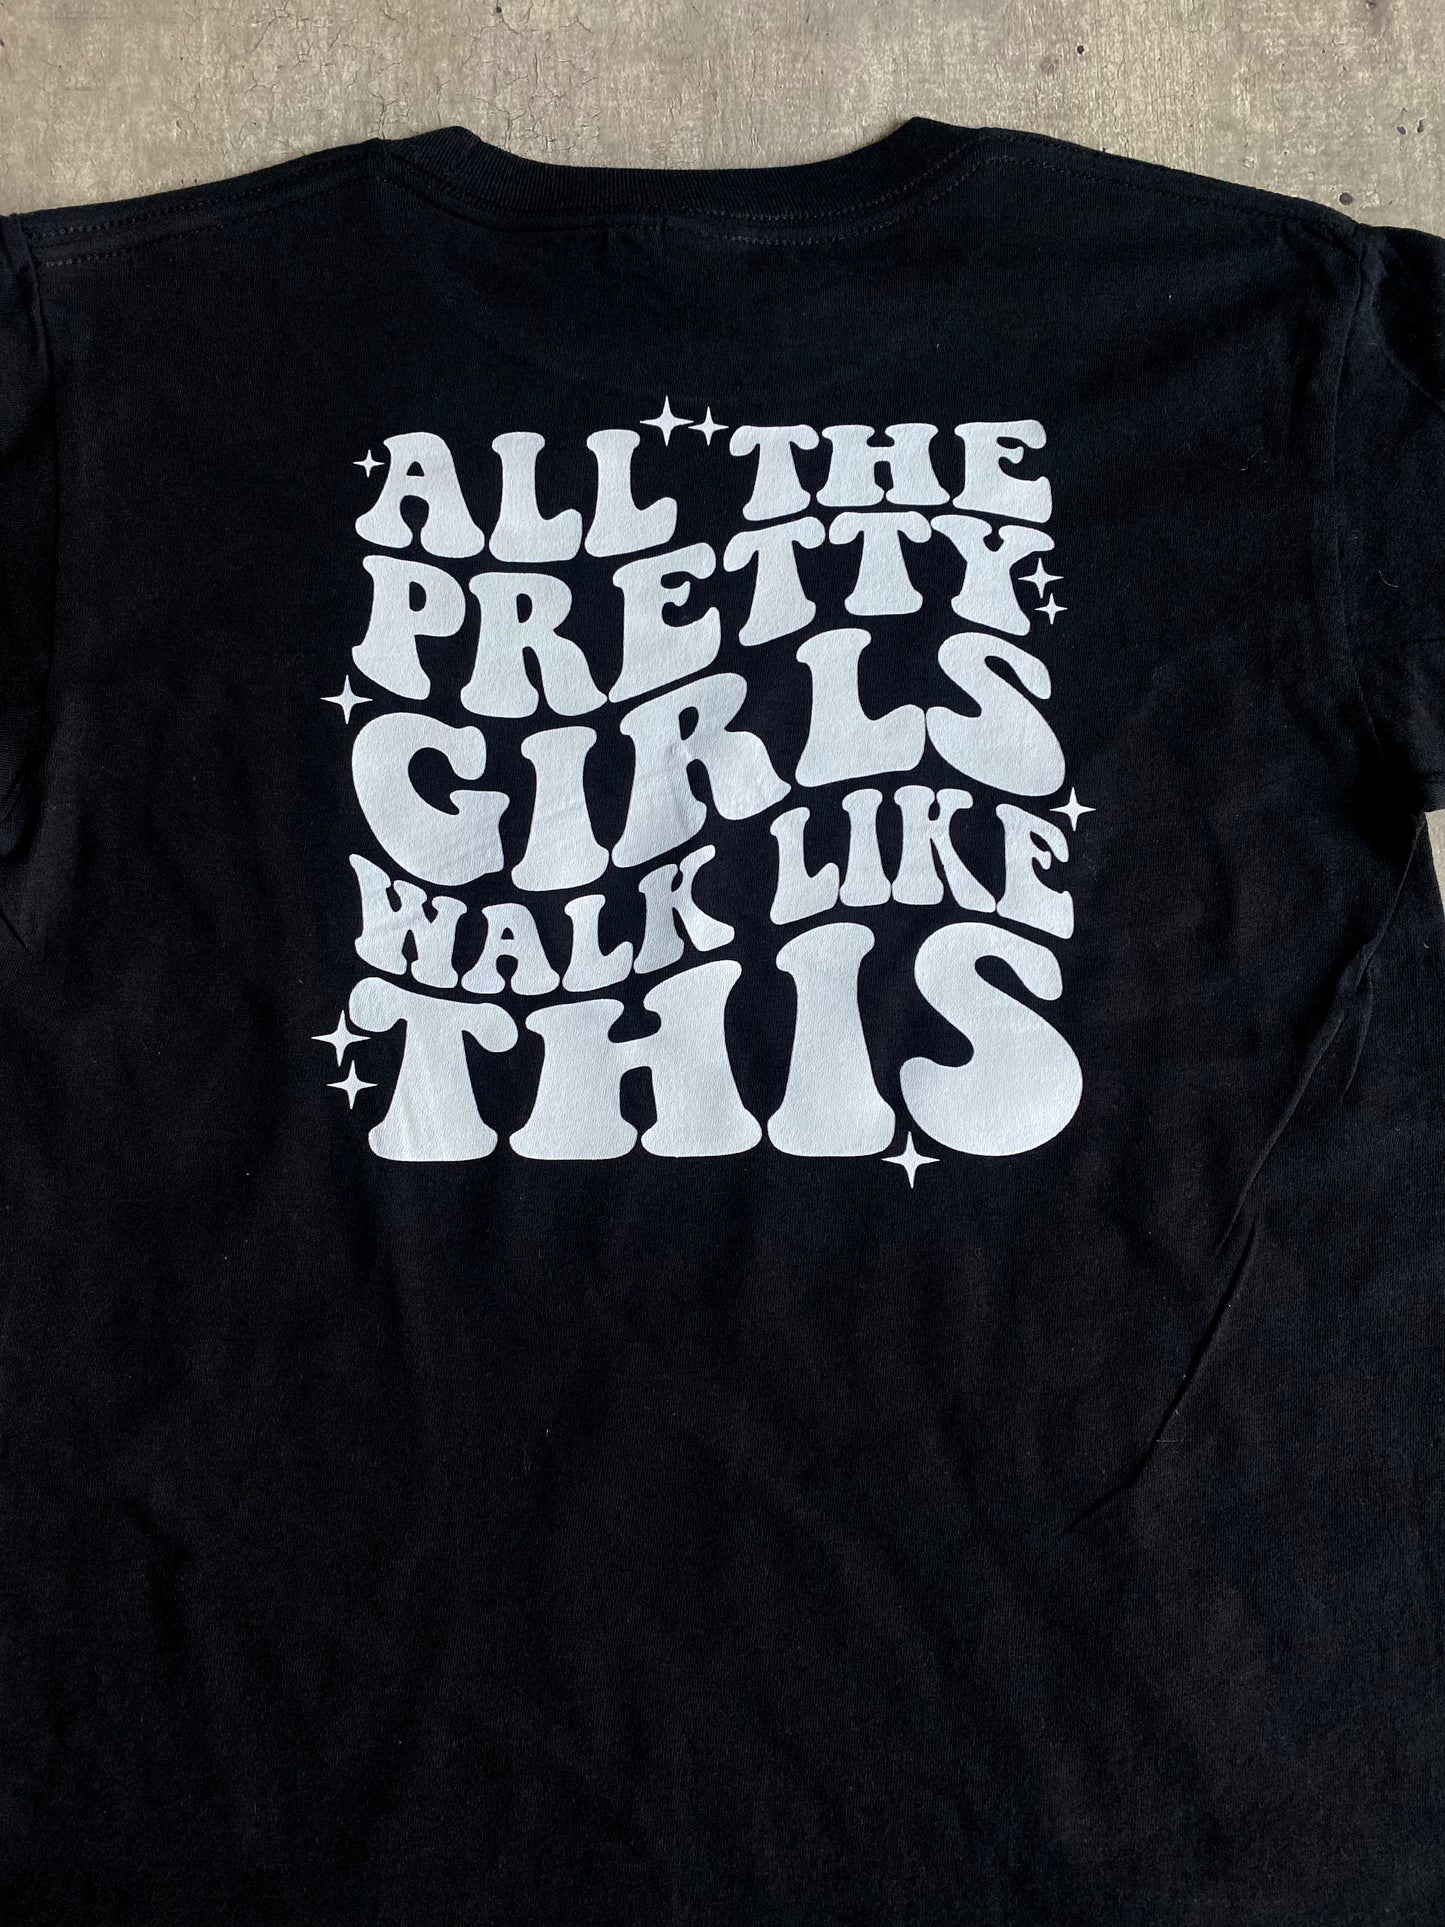 Pretty Girls Walk Like This Kids Tee